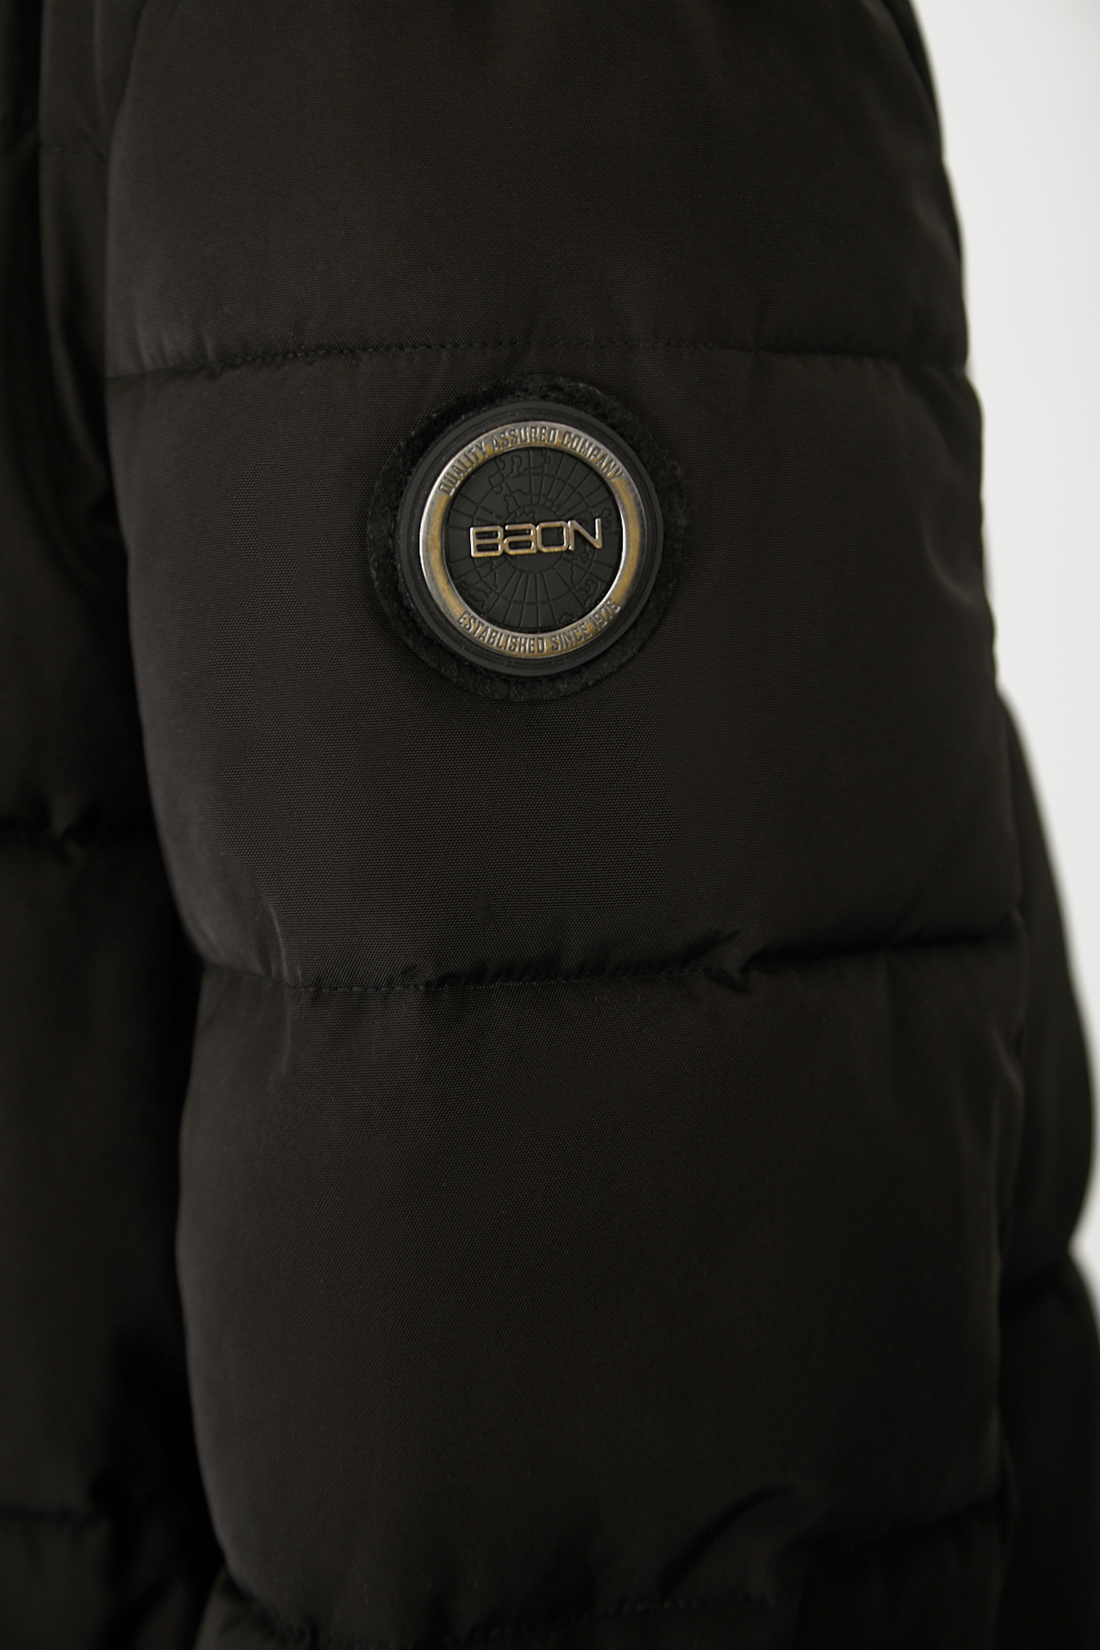 Куртка (Эко пух) (арт. baon B541506), размер M, цвет черный Куртка (Эко пух) (арт. baon B541506) - фото 3